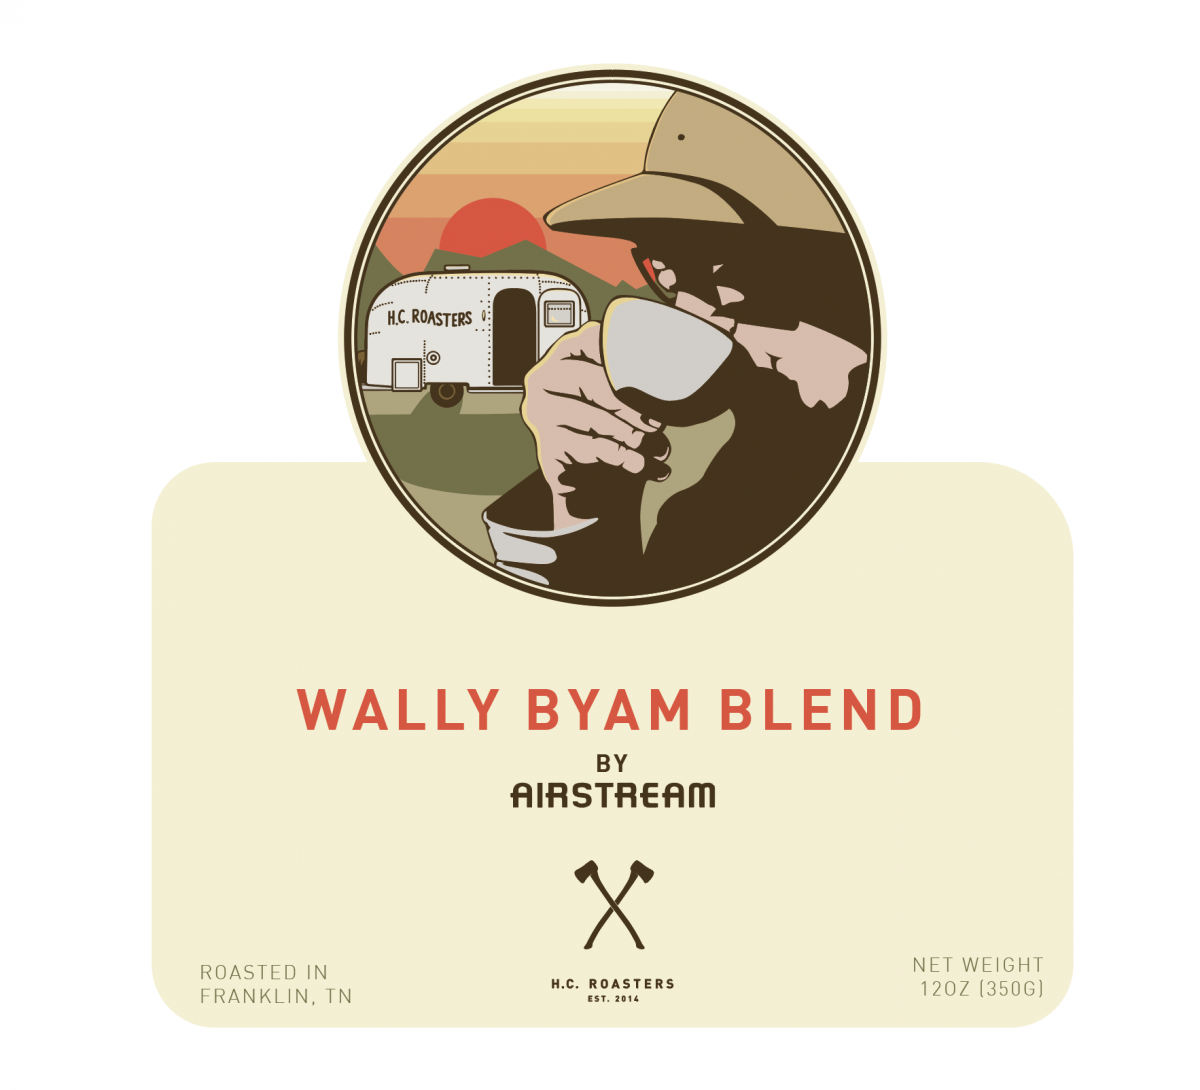 wally byam blend label honest coffee